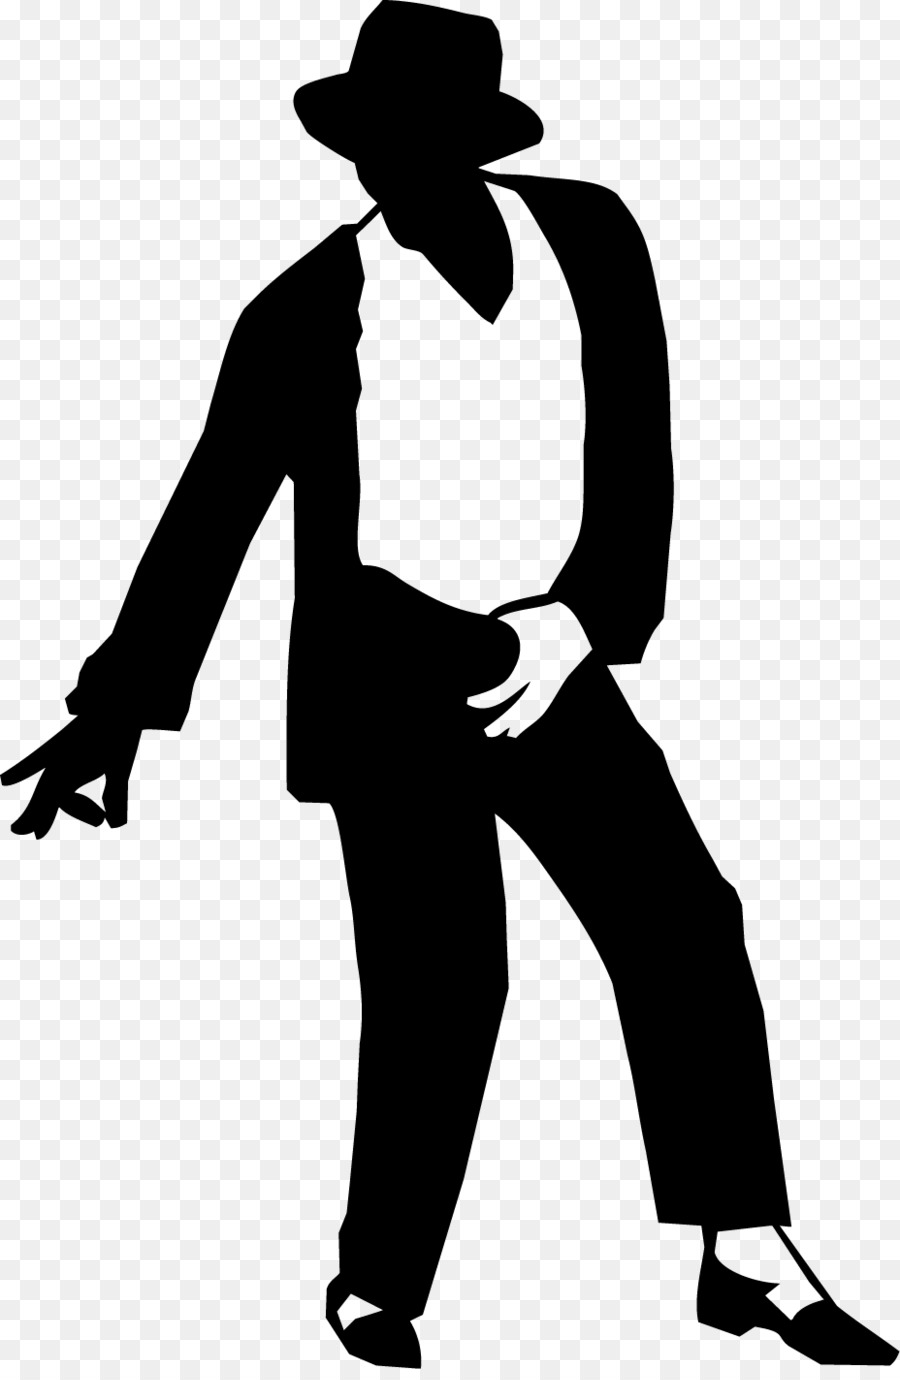 Moonwalk Silhouette Sticker Decal Clip art - Michael Jackson dancing silhouette material png download - 928*1412 - Free Transparent  png Download.